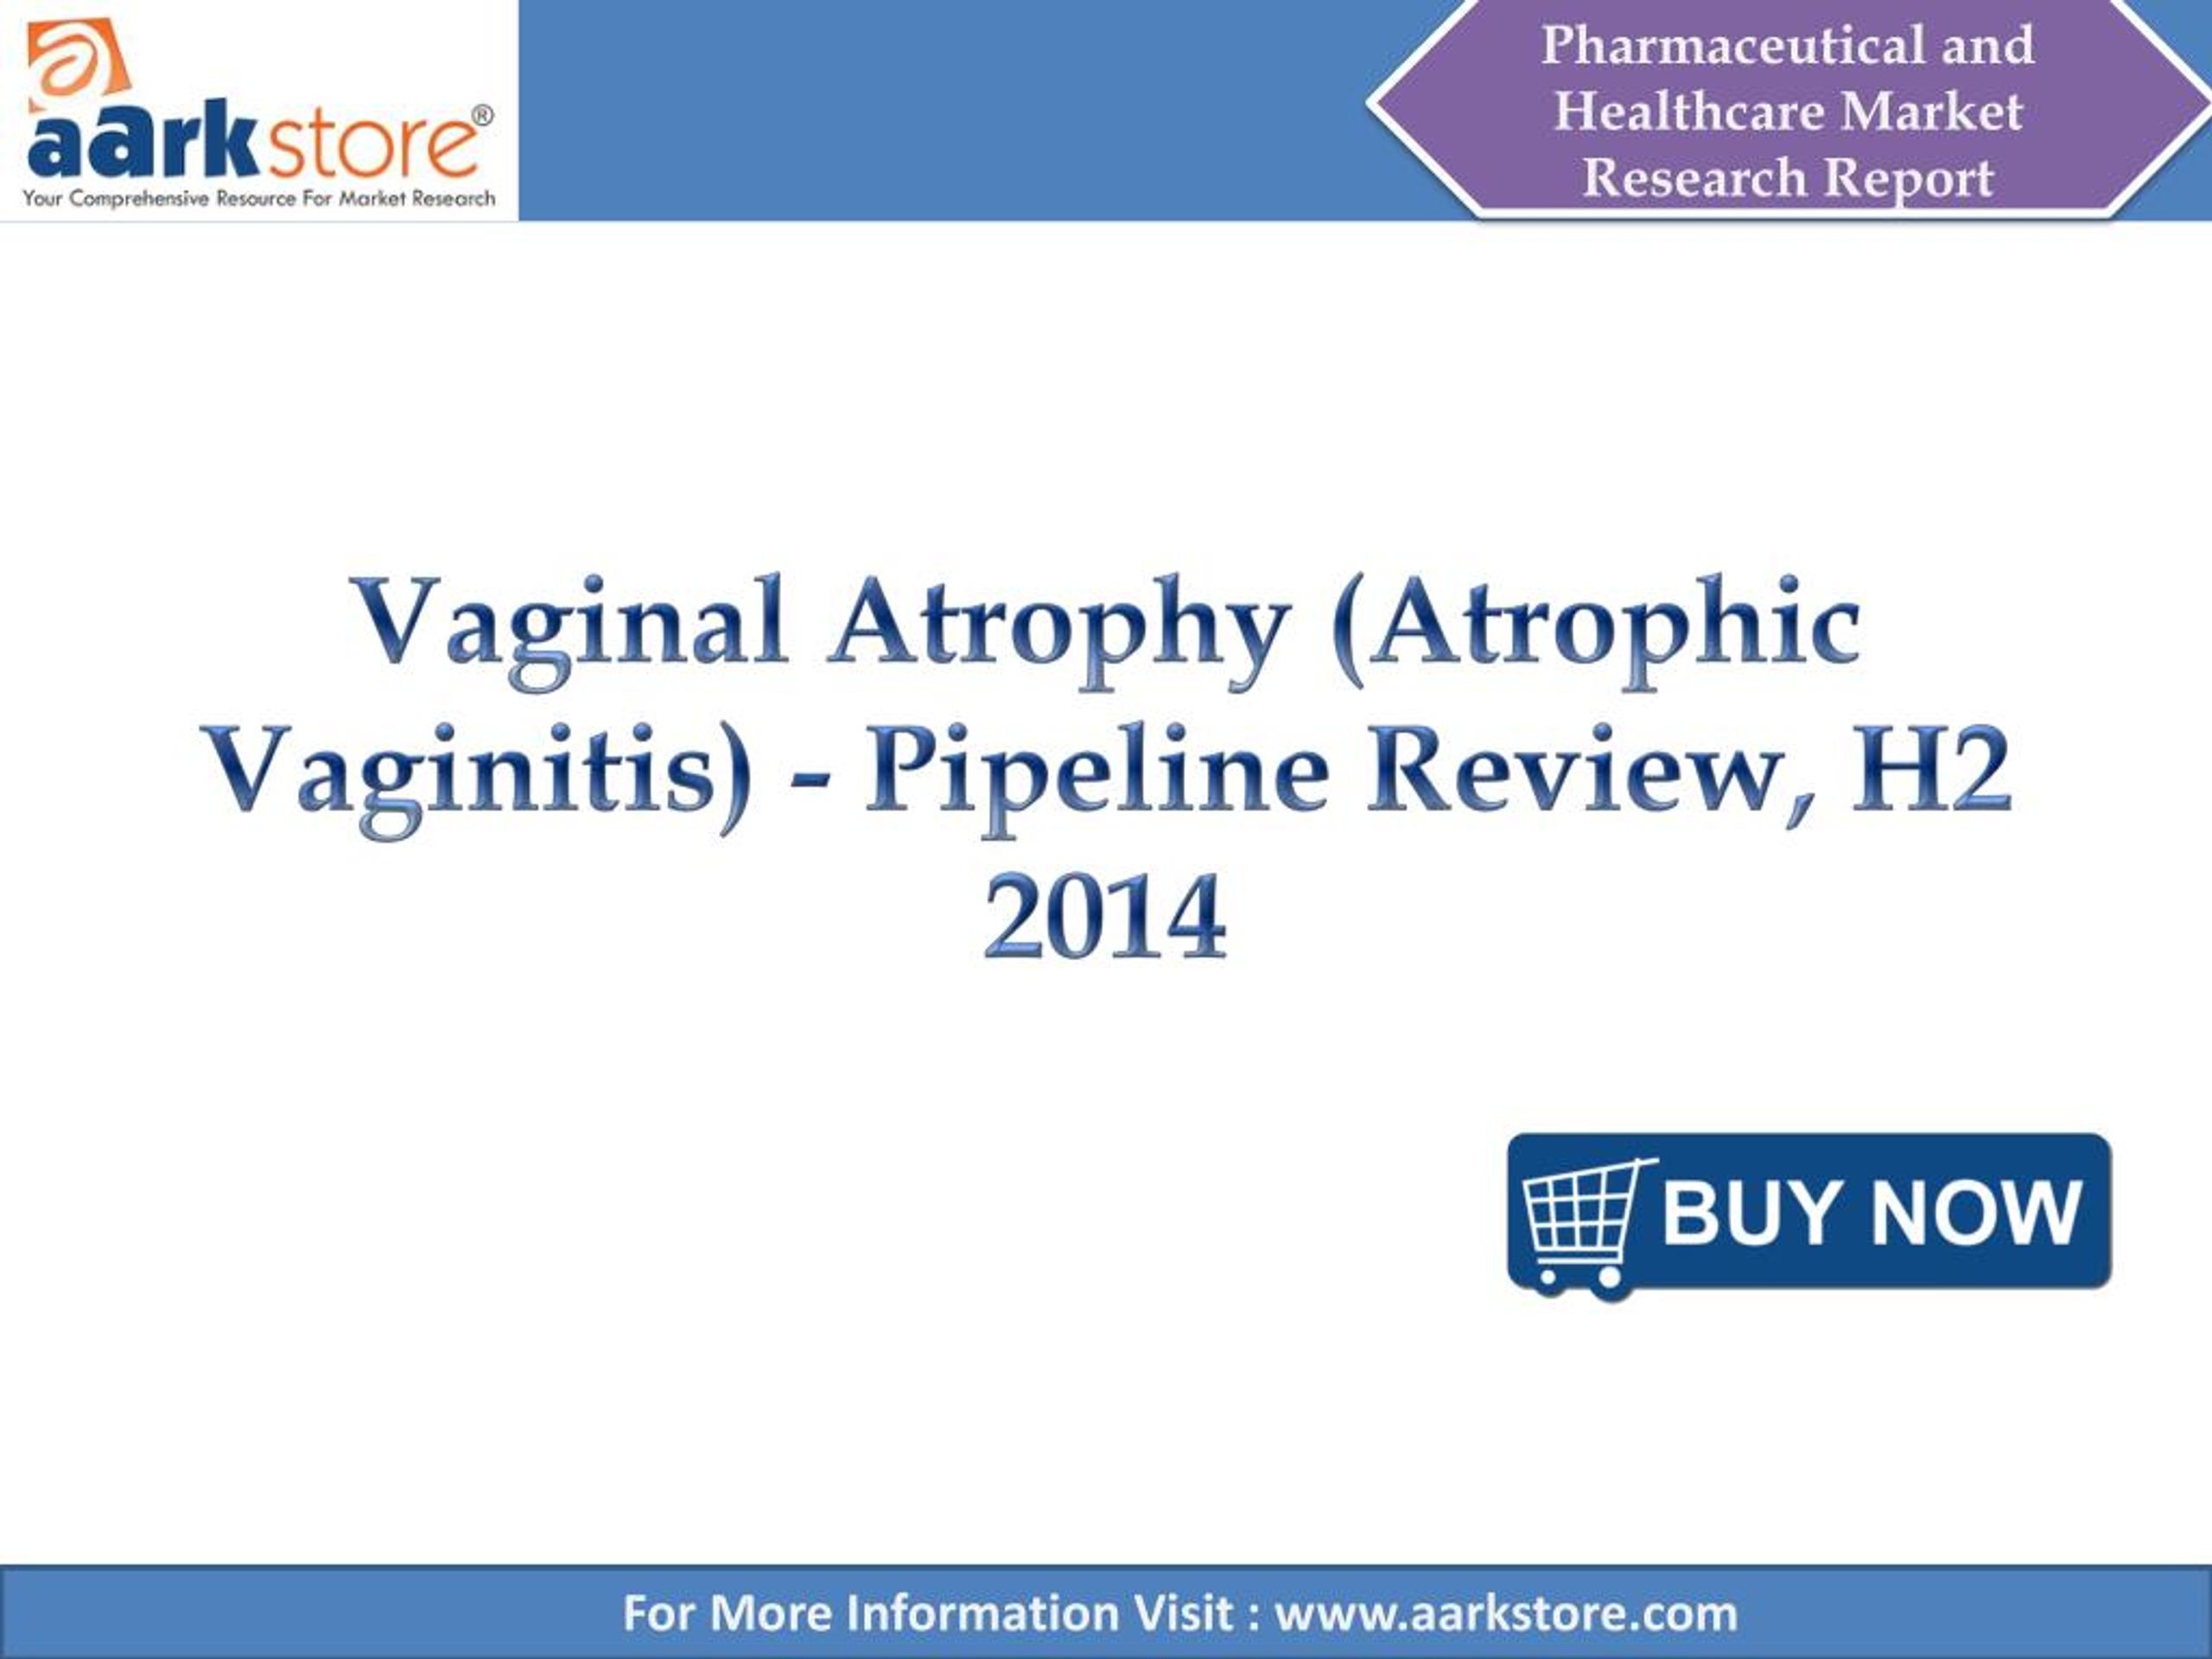 Postmenopausal Vaginal Atrophy Treatment & Drug Market Report